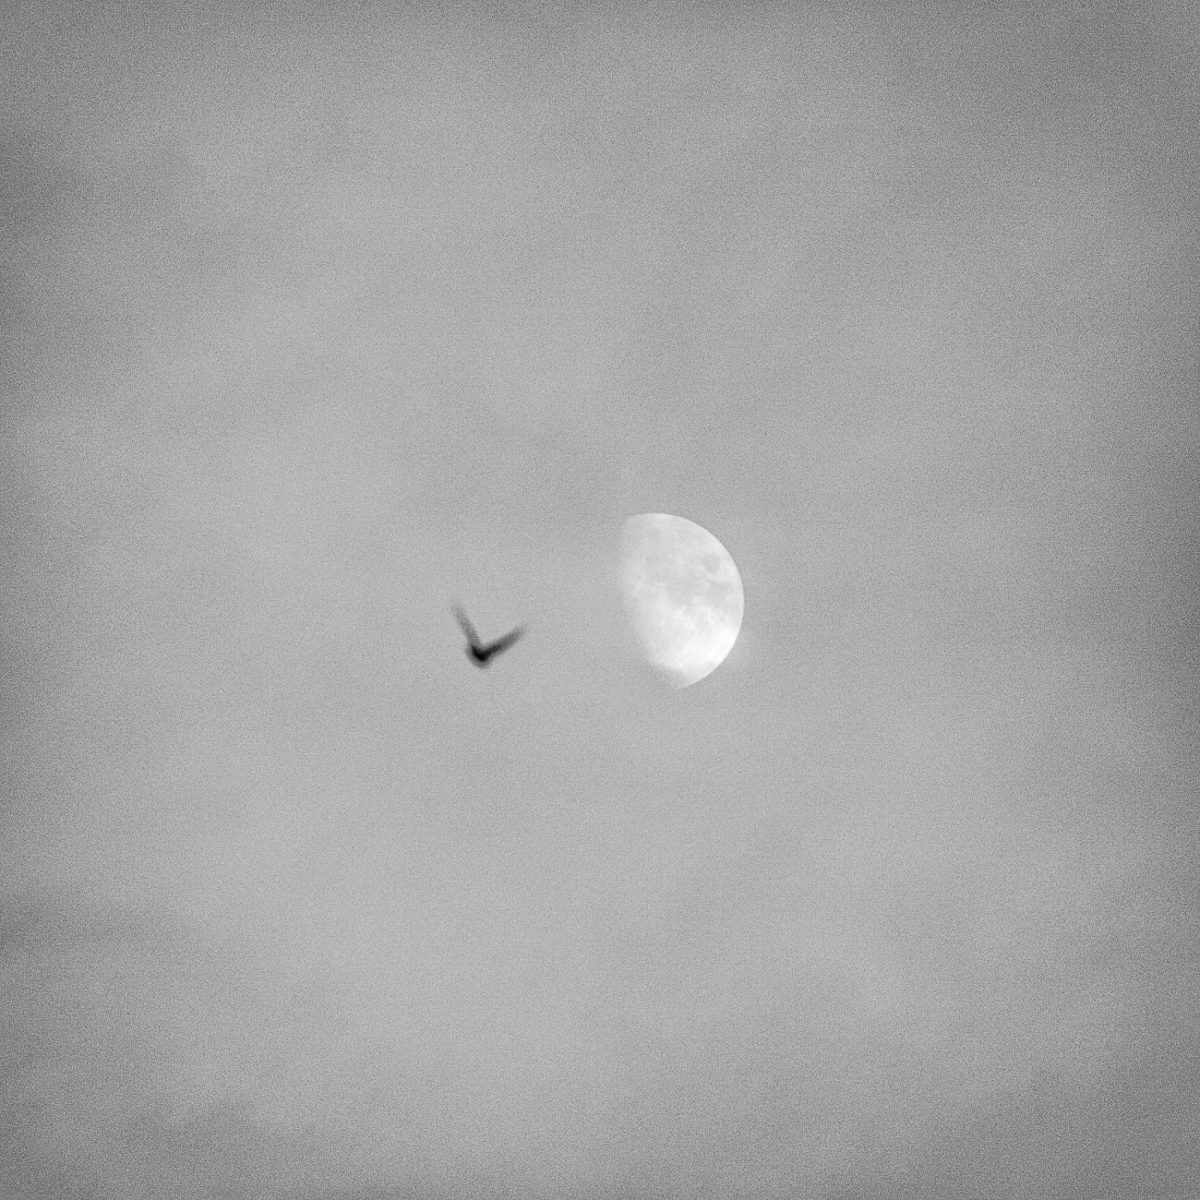 Ascend - A photo of a bird rising towards the moon